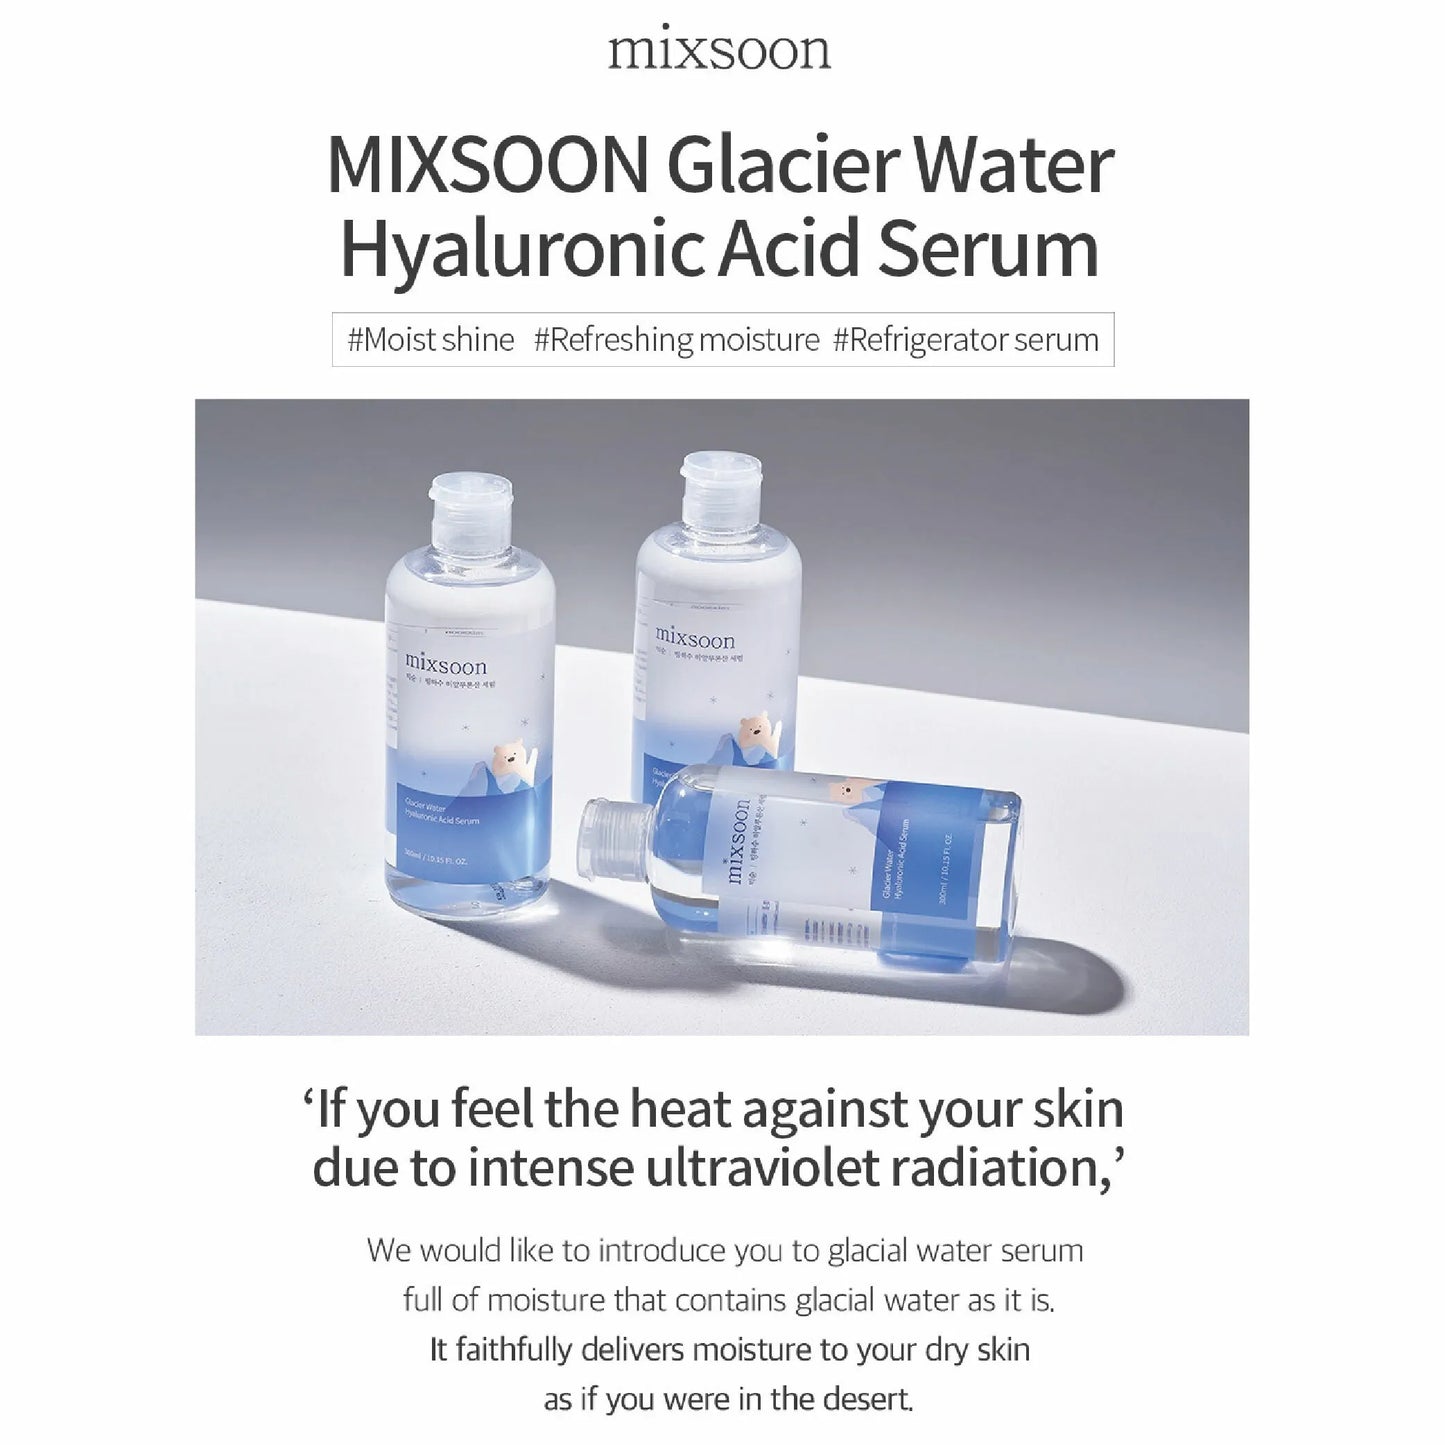 Mixsoon Glacier Water Hyaluronic Acid Serum 300ml